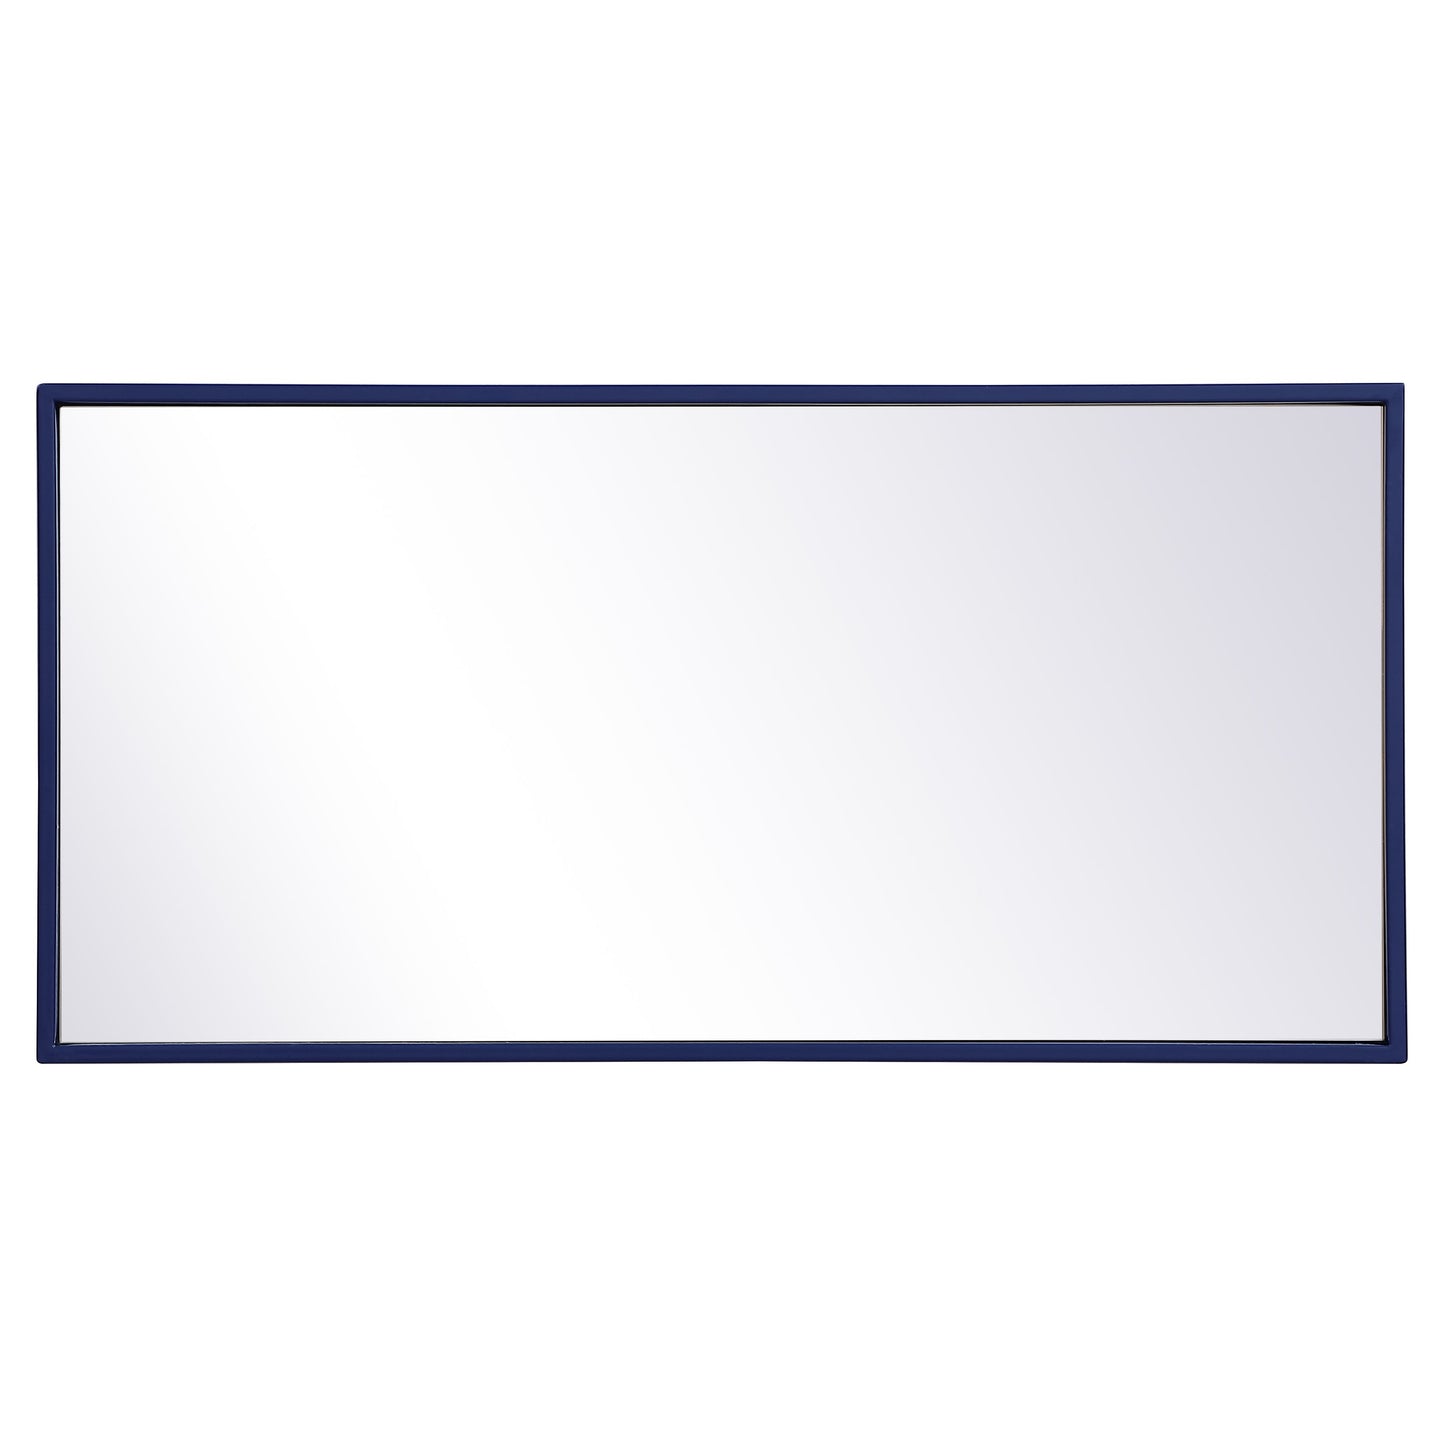 MR41428BL Monet 28" x 14" Metal Framed Rectangular Mirror in Blue